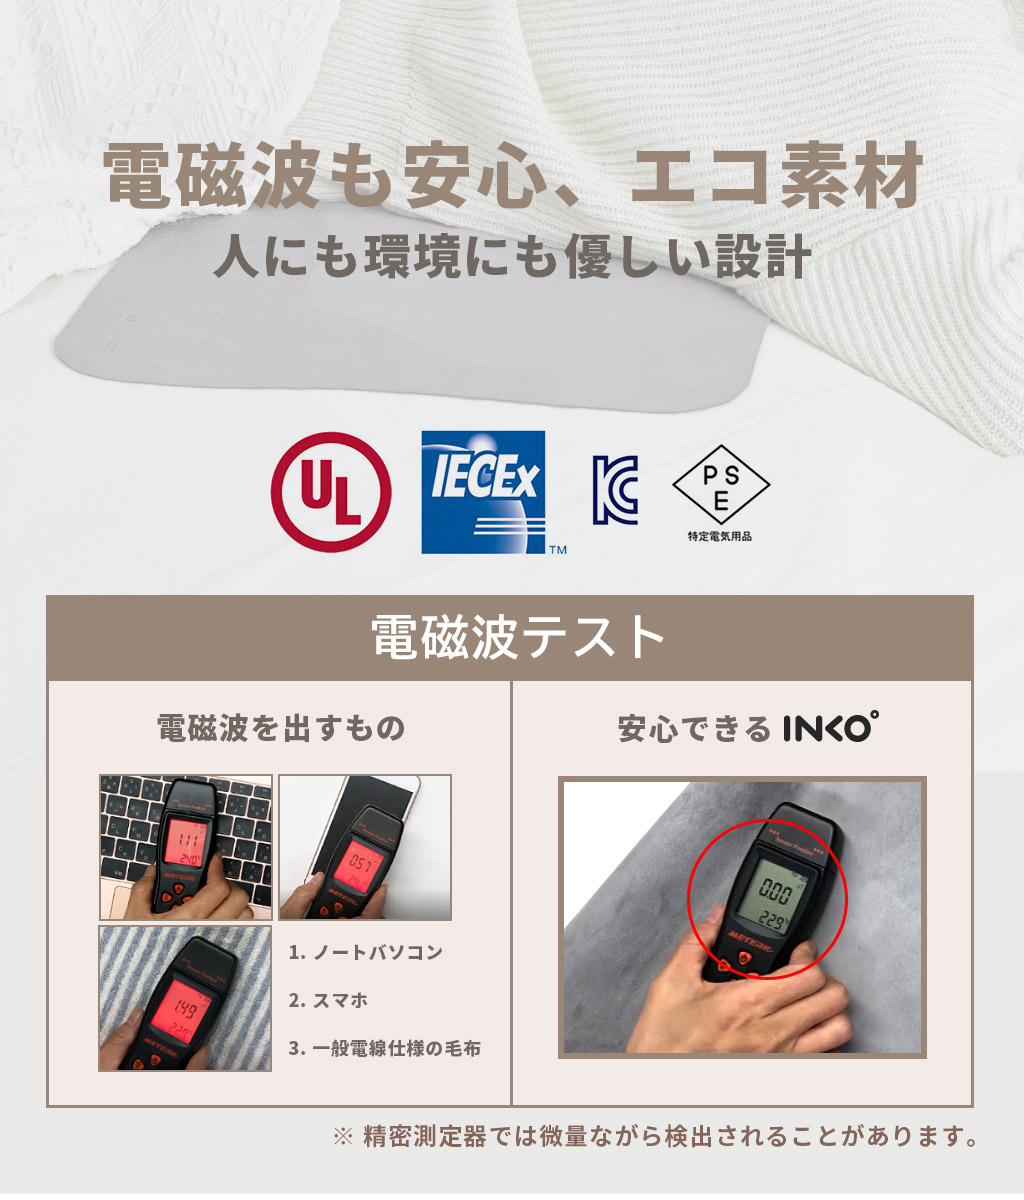 INKO Heating Mat Sleep+ - 【公式サイト】インクで温める！INKO ヒーター